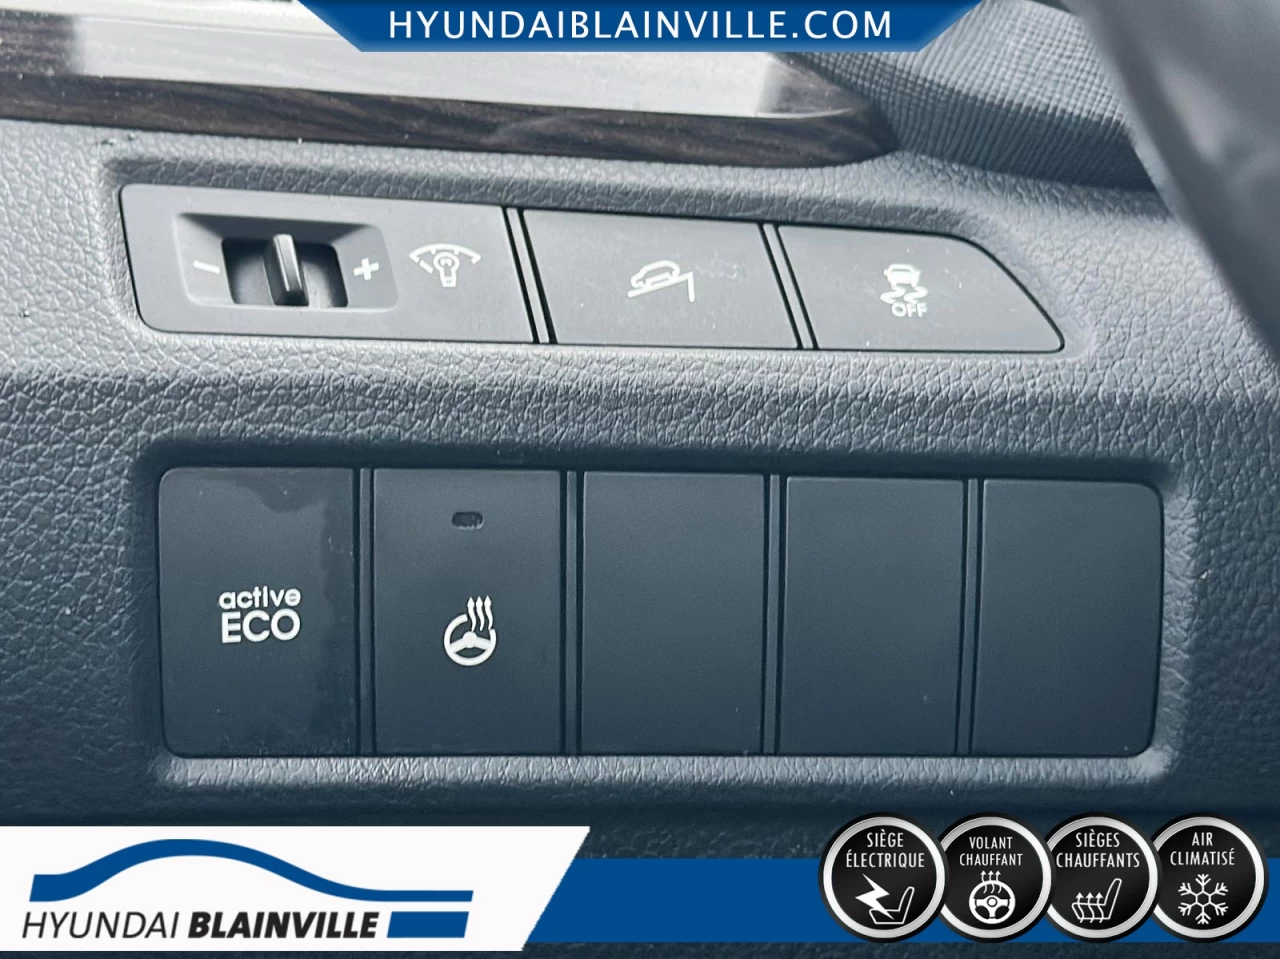 2016 Hyundai Santa Fe Sport FWD, PREMIUM, 2.4L, BANCS CHAUFFANTS+ Image principale